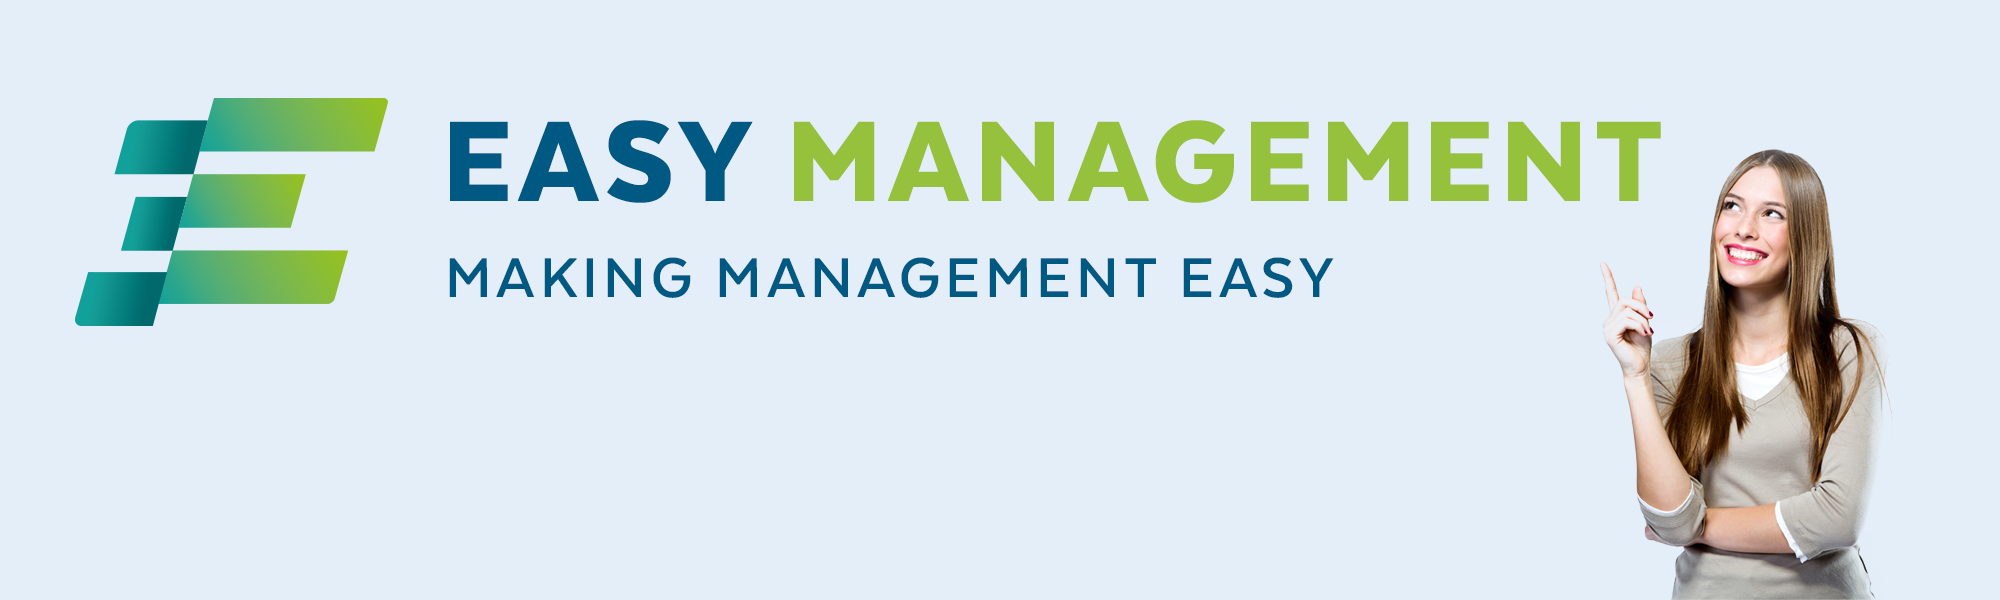 Easy Management - Making Management Easy